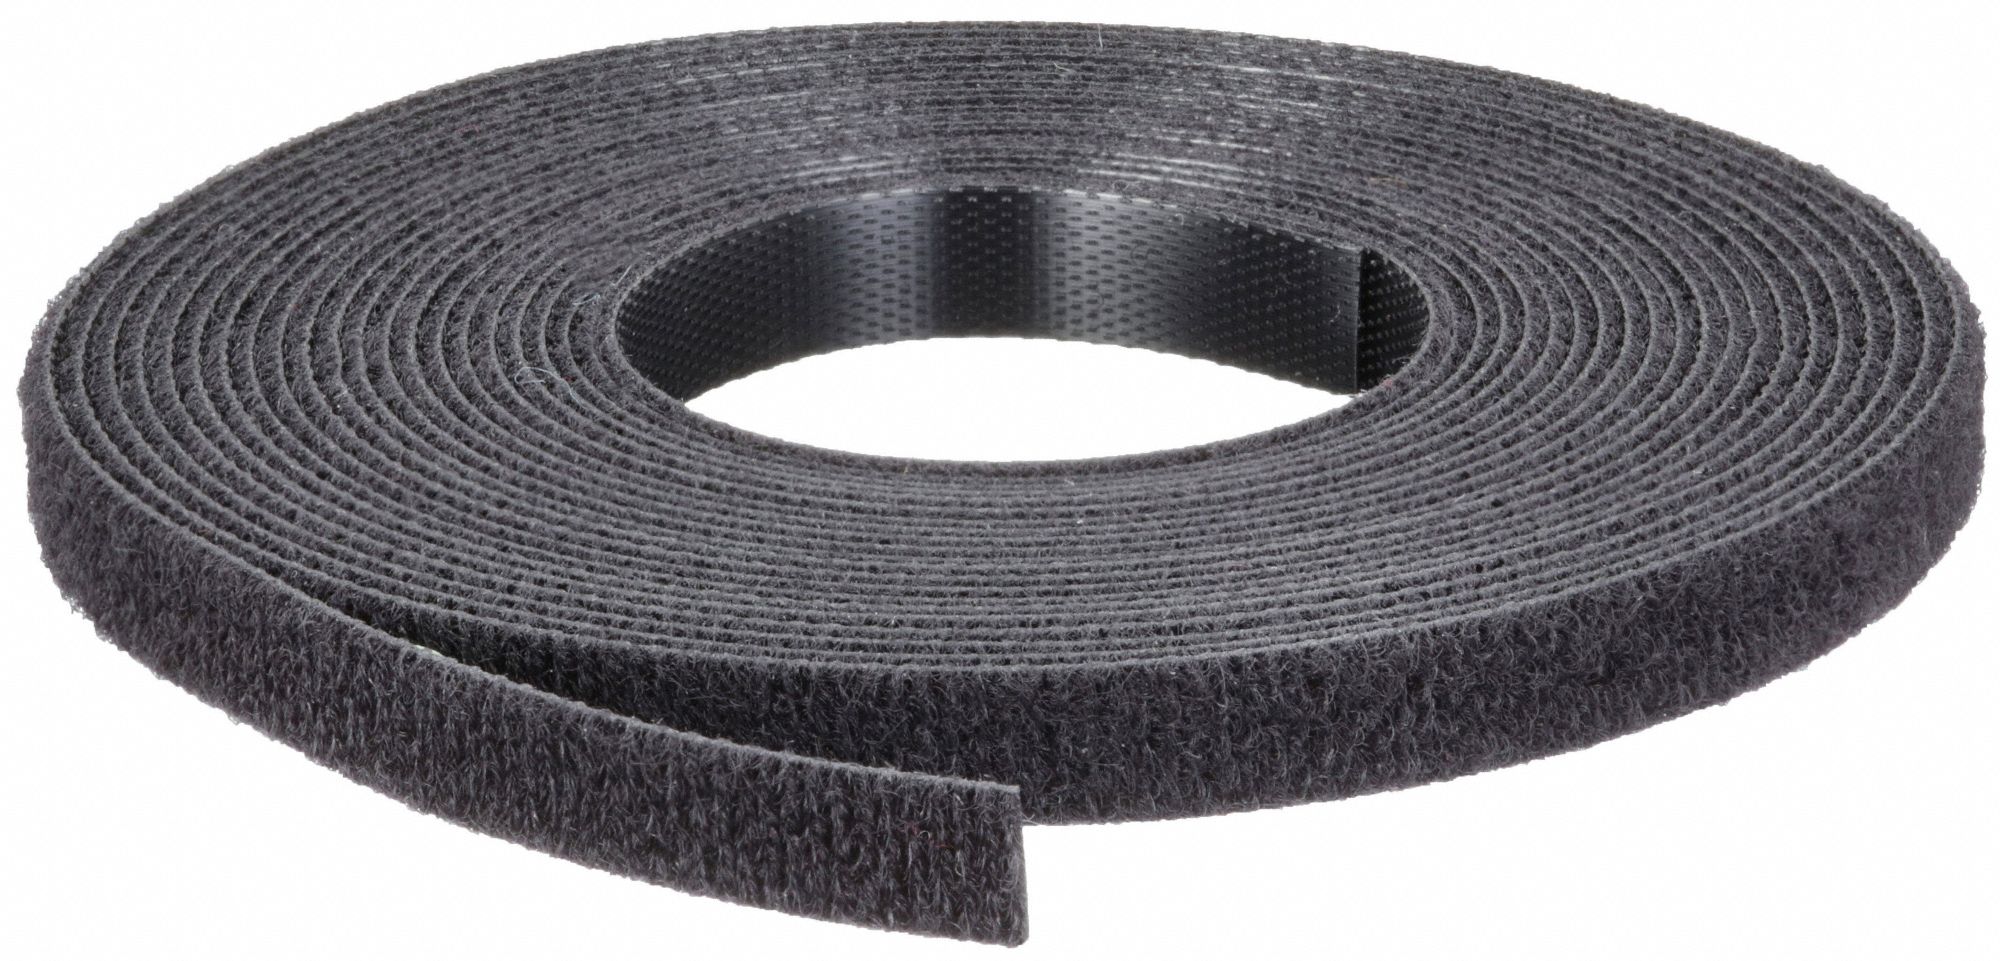 Hook & Loop Cable Tie, 15' roll, Miniature cross section, Black